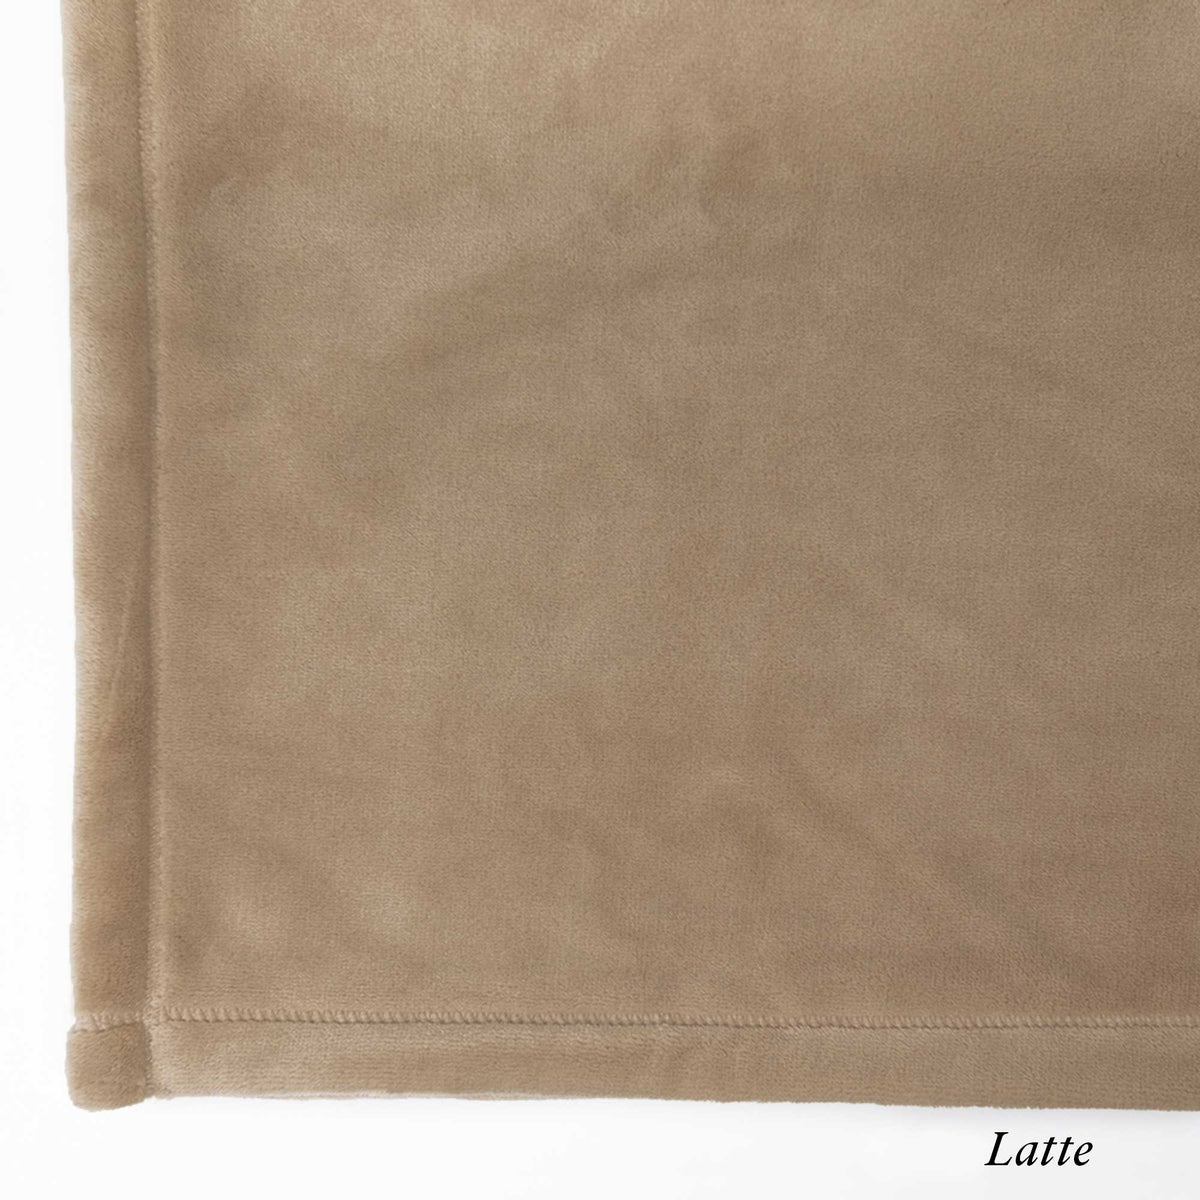 Latte Luster Loft Fleece Swatch - Luster Loft Fleece Throw Pillows - American blanket company